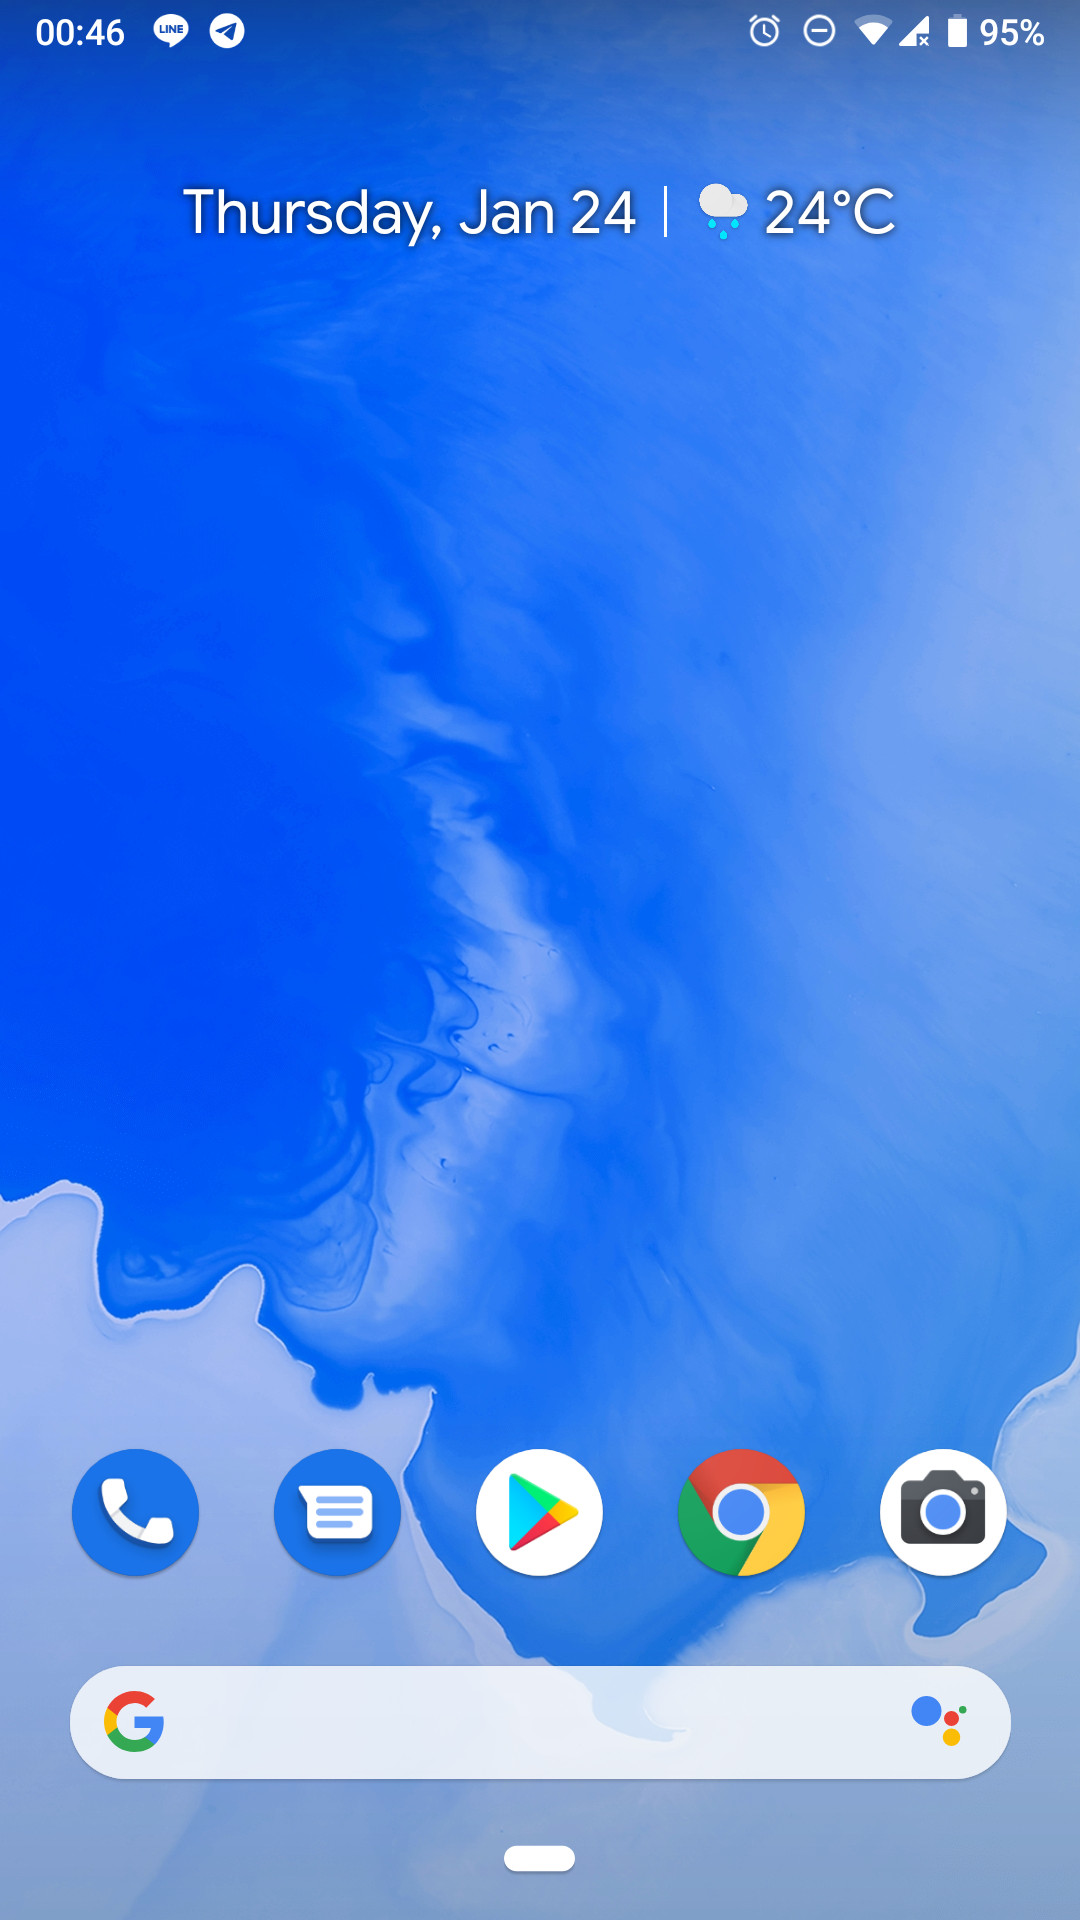 Android 9 Pie Home Screen Screenshot